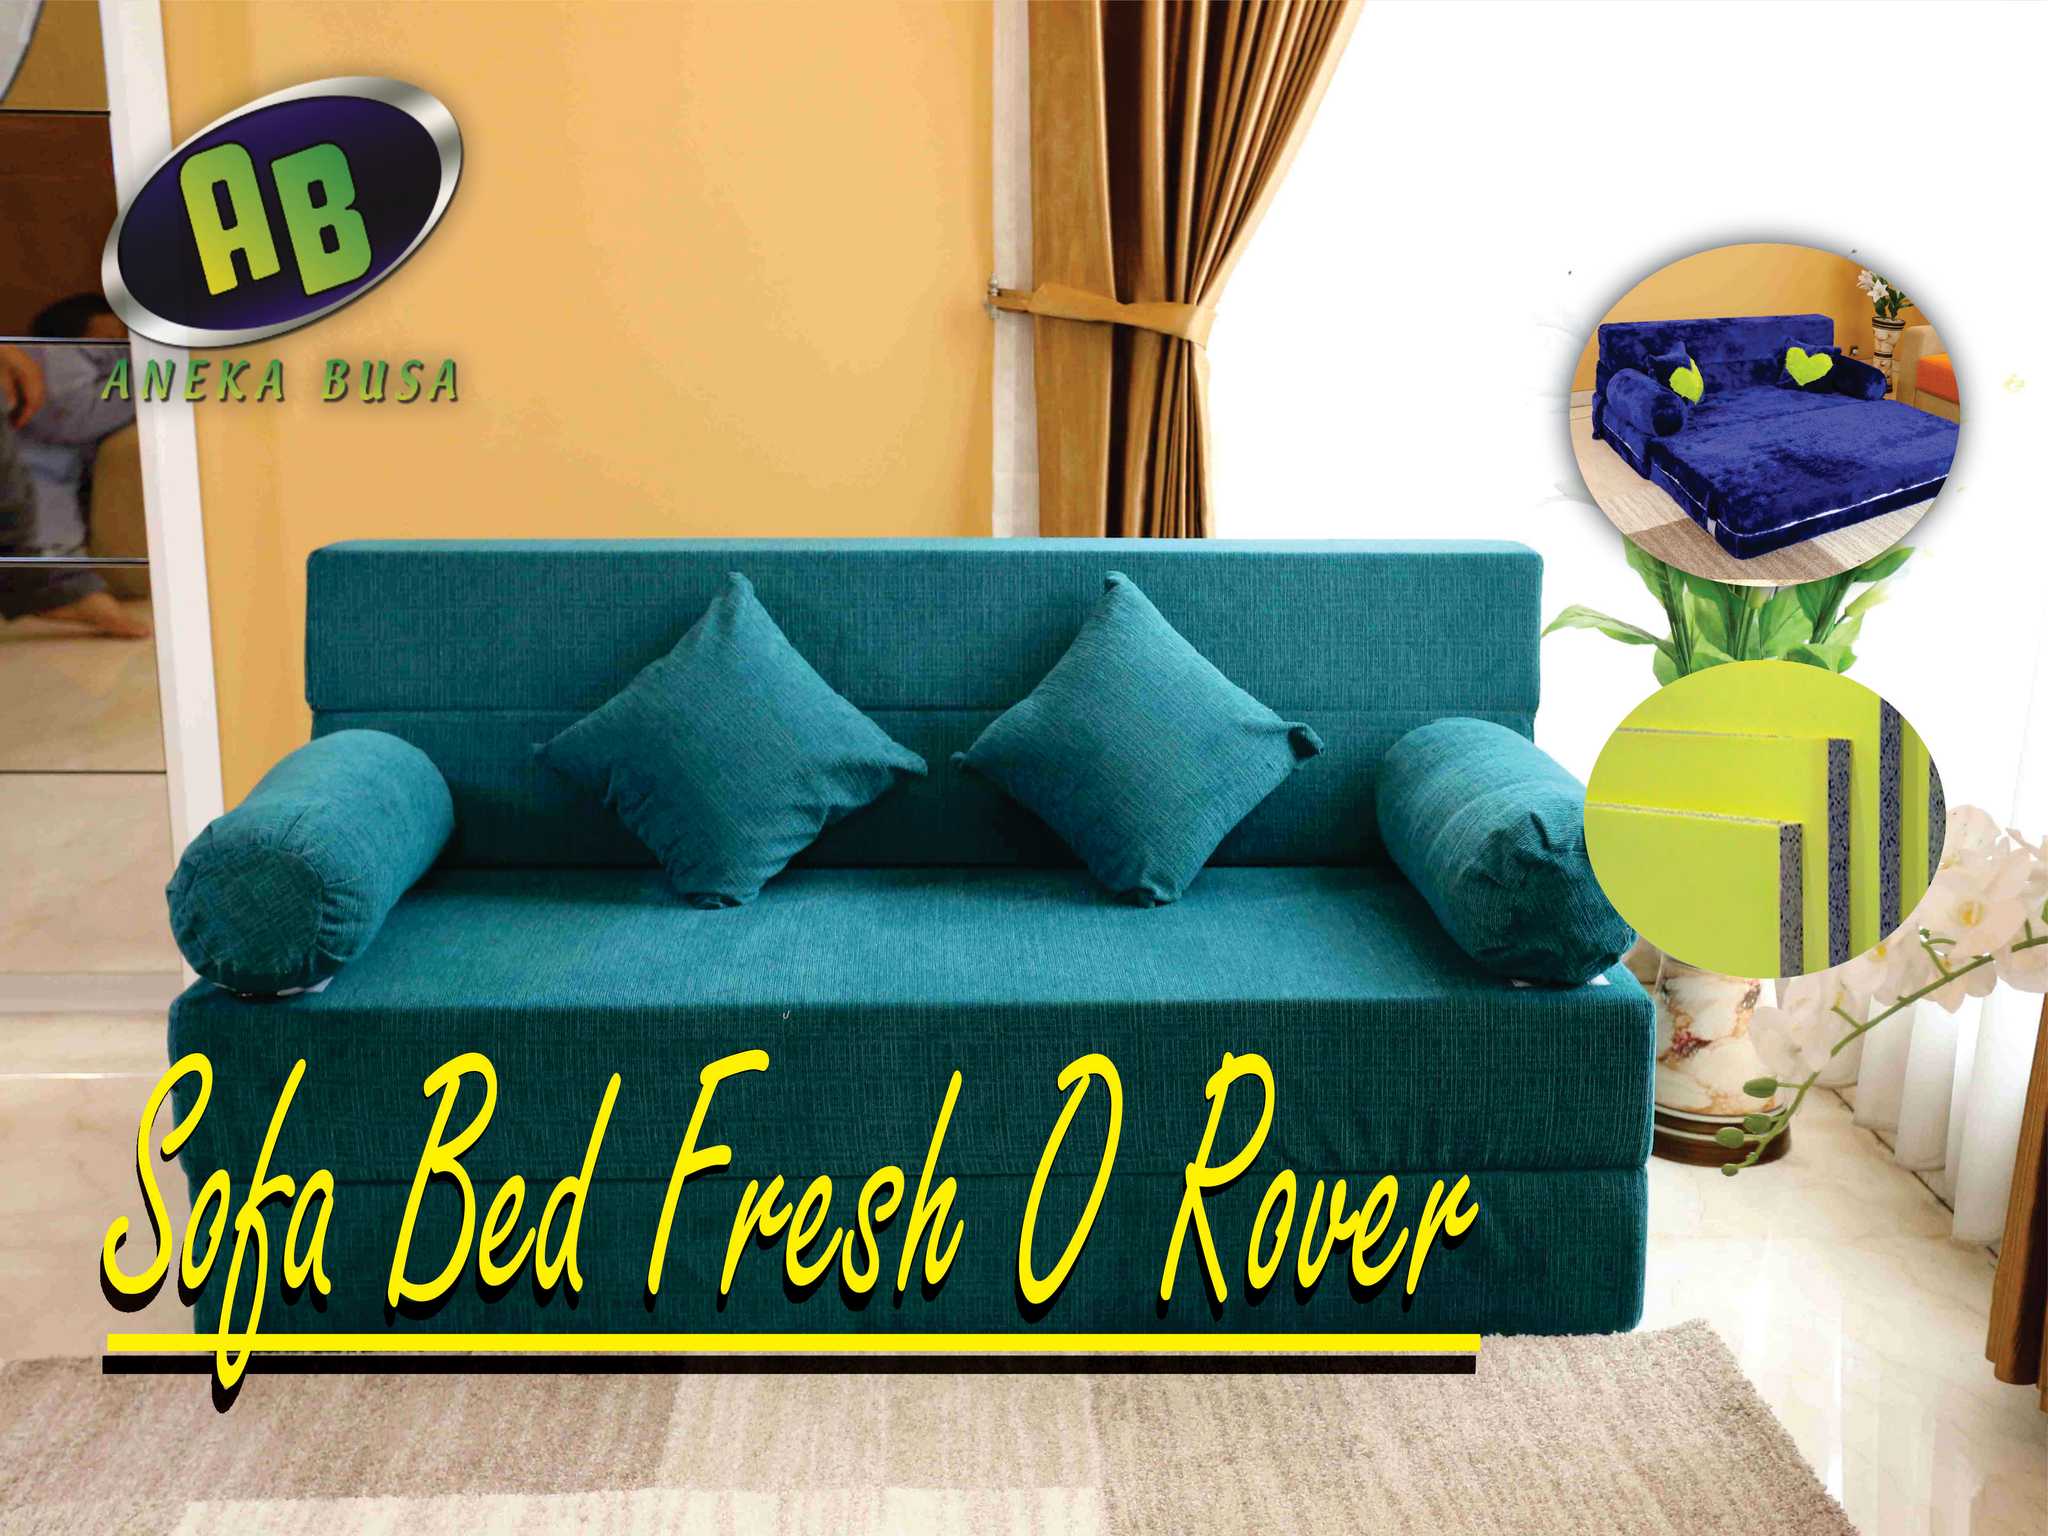 Sofa Bed fresh O